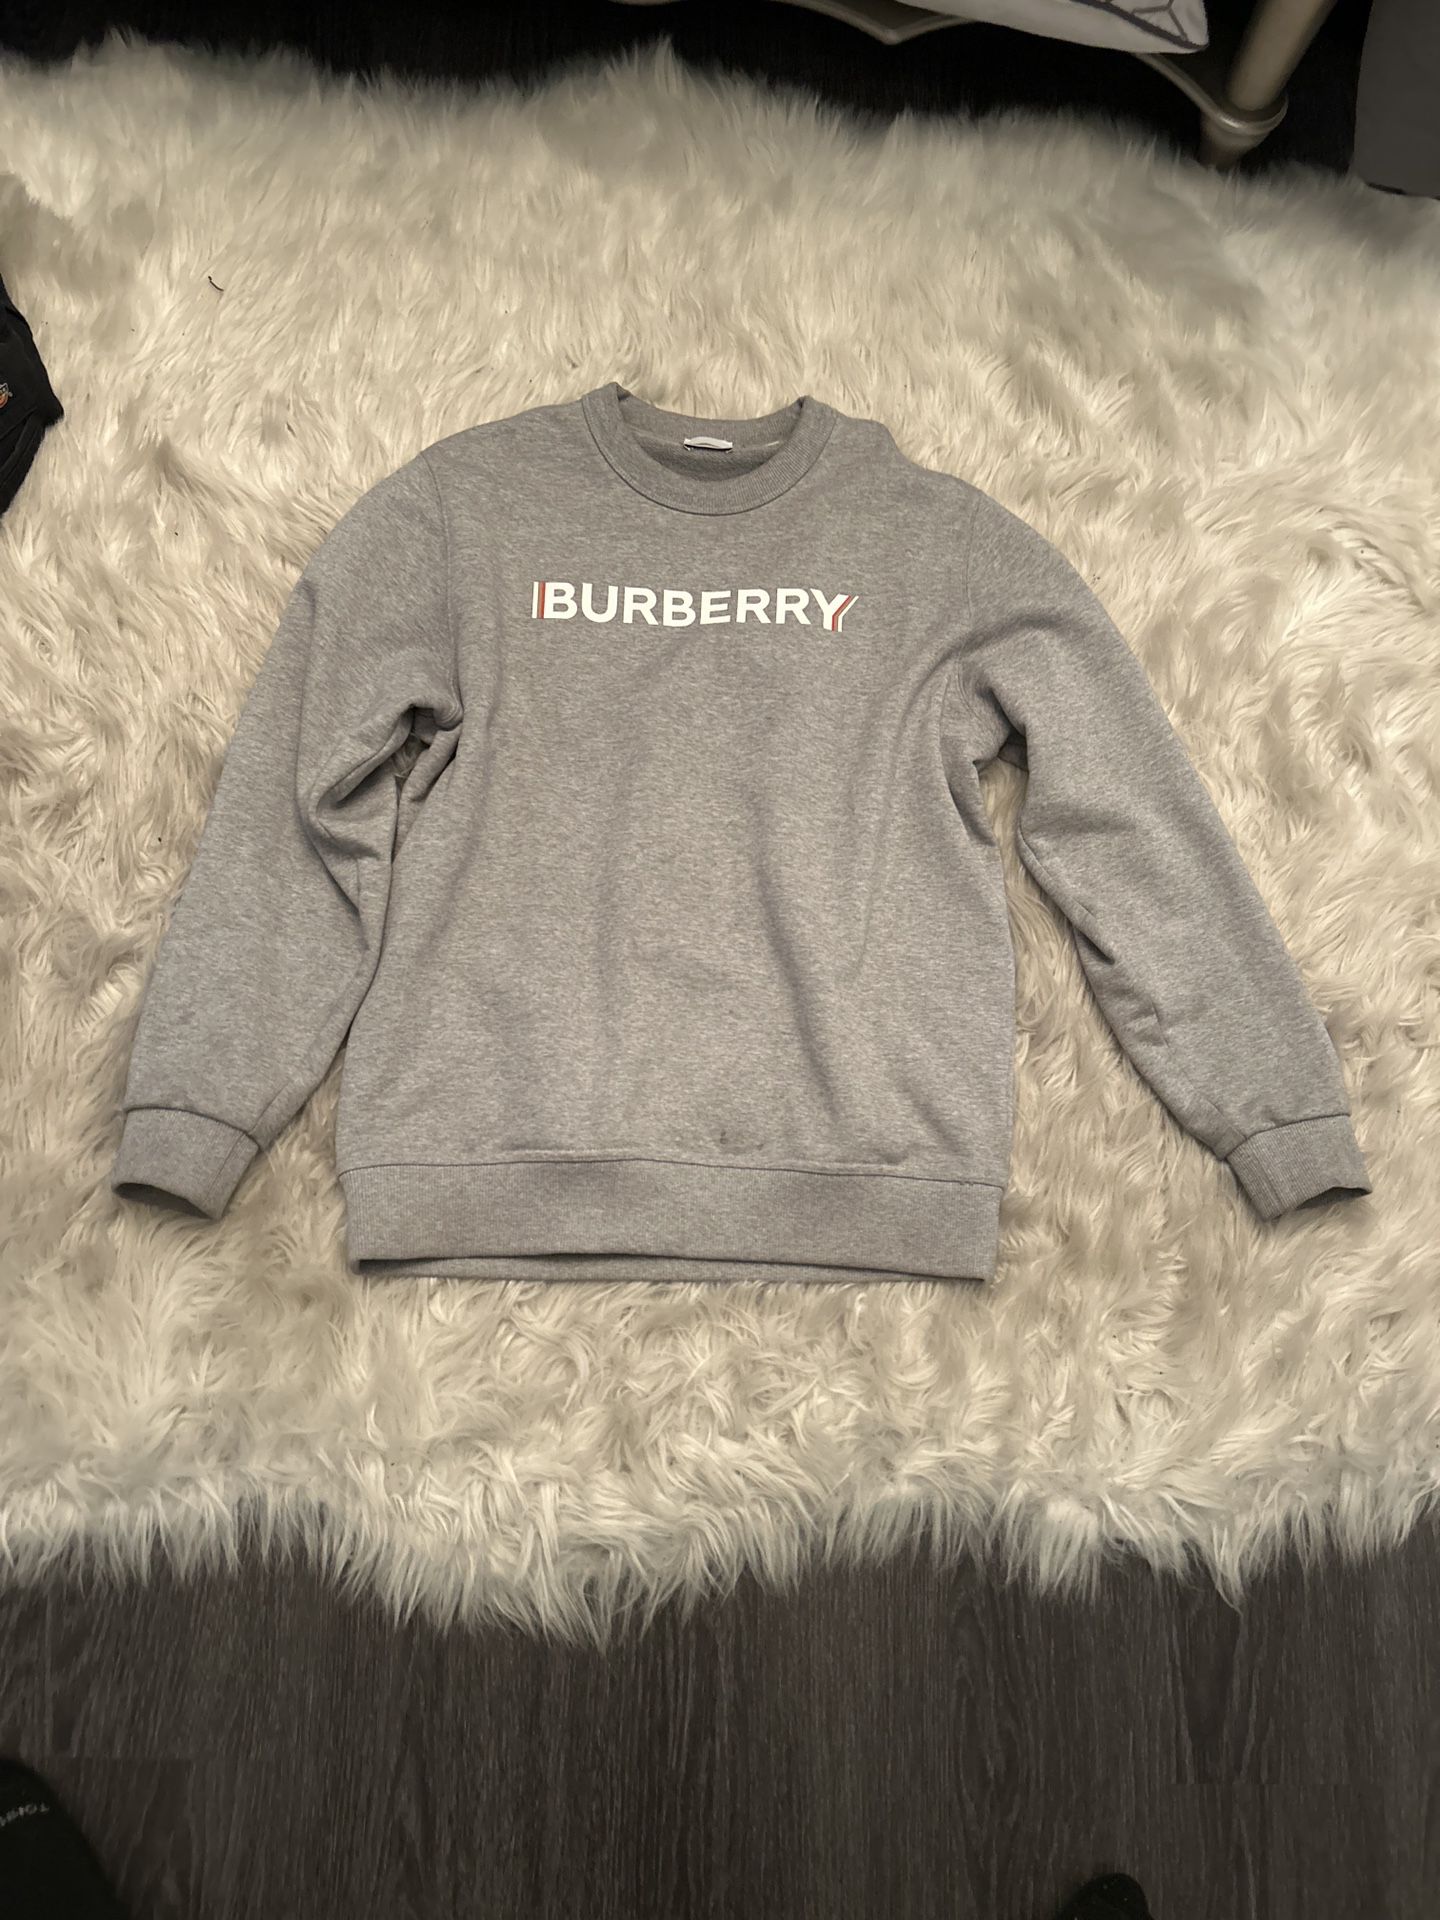 Burberry sweatshirt